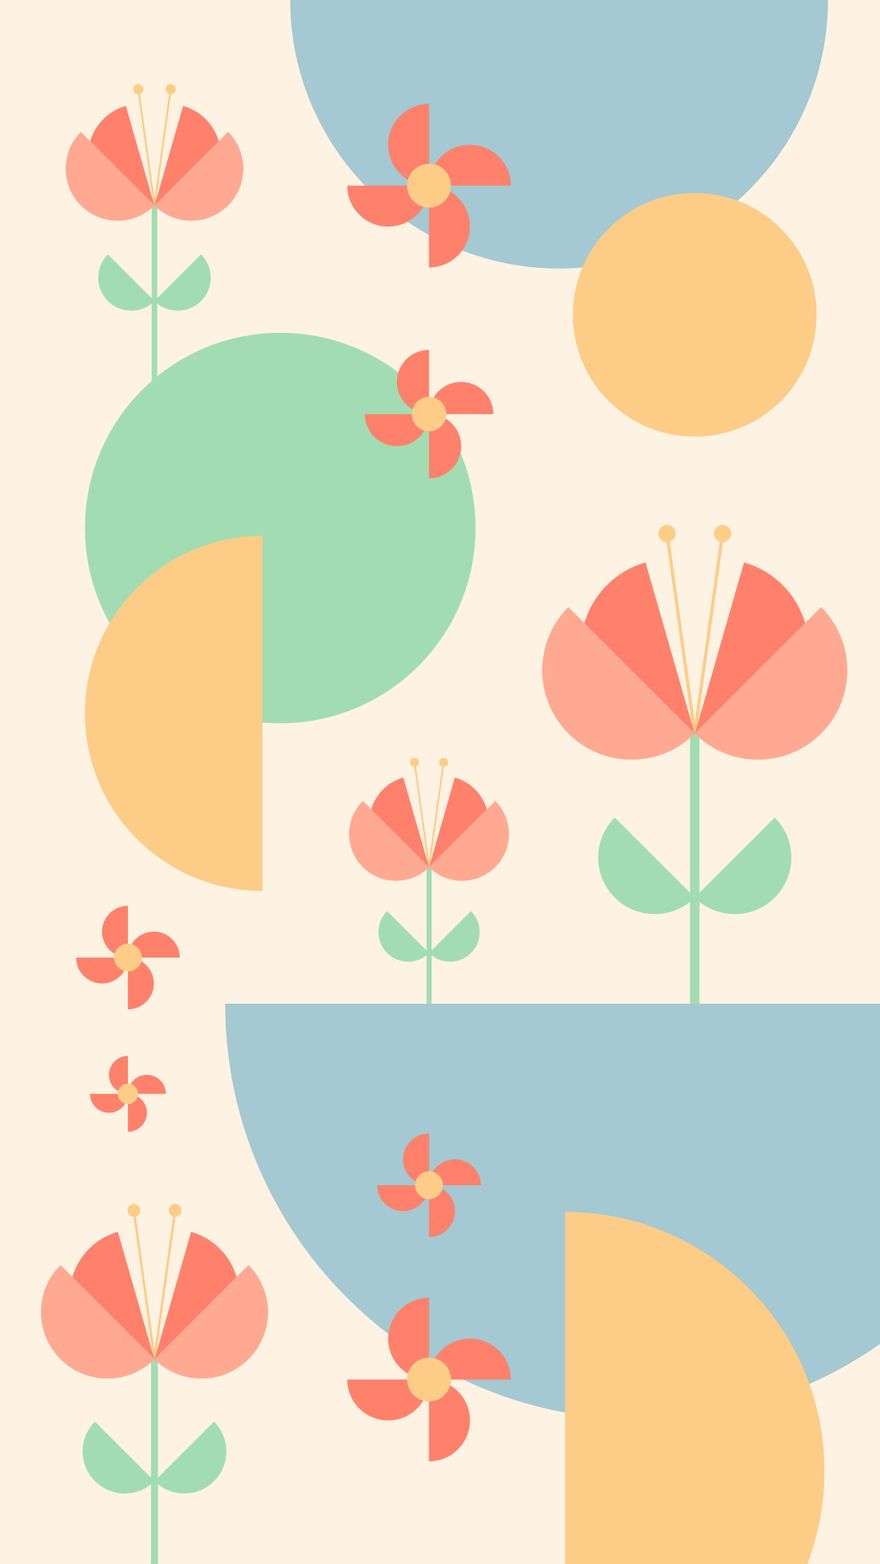 Free Flowers WallPaper in Illustrator, EPS, SVG, JPG, PNG